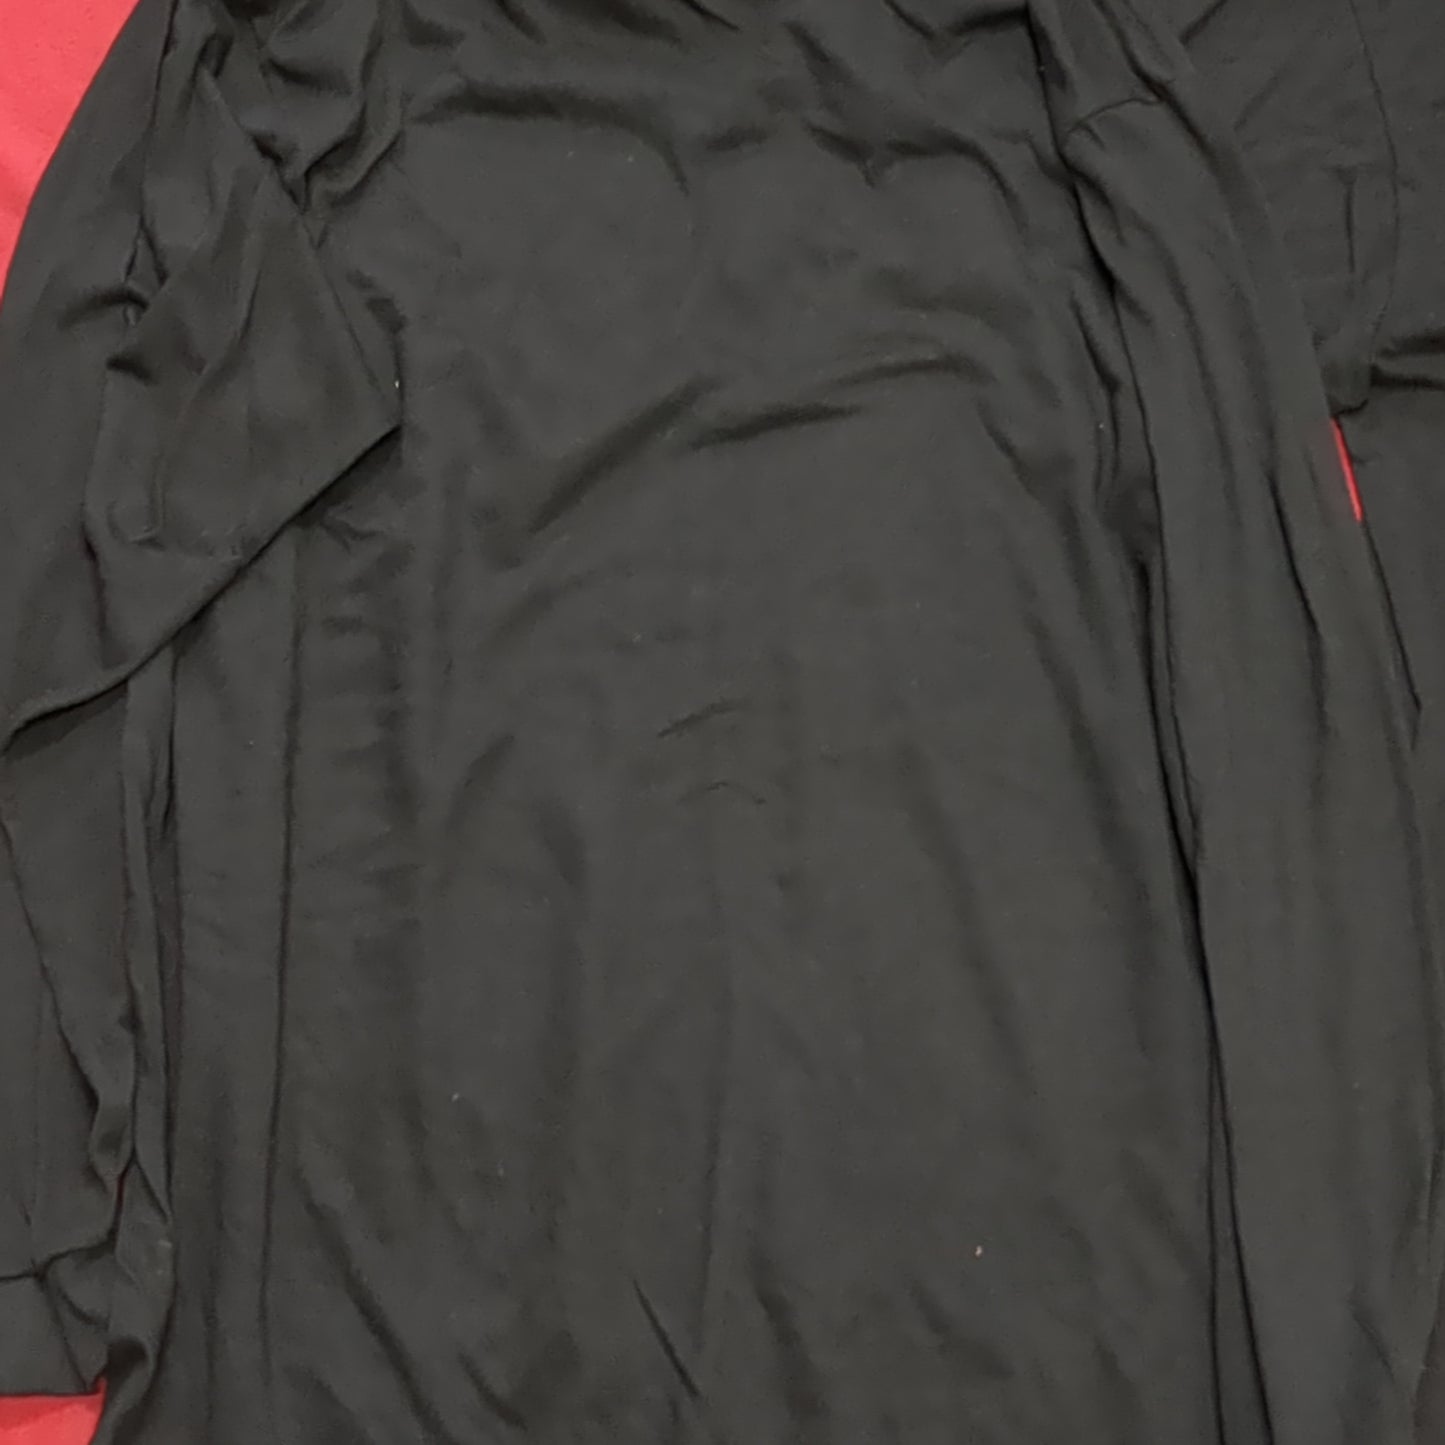 Medium APFU SET - Shorts - Long-Sleev & Short-Sleeve Shirts (21a49)